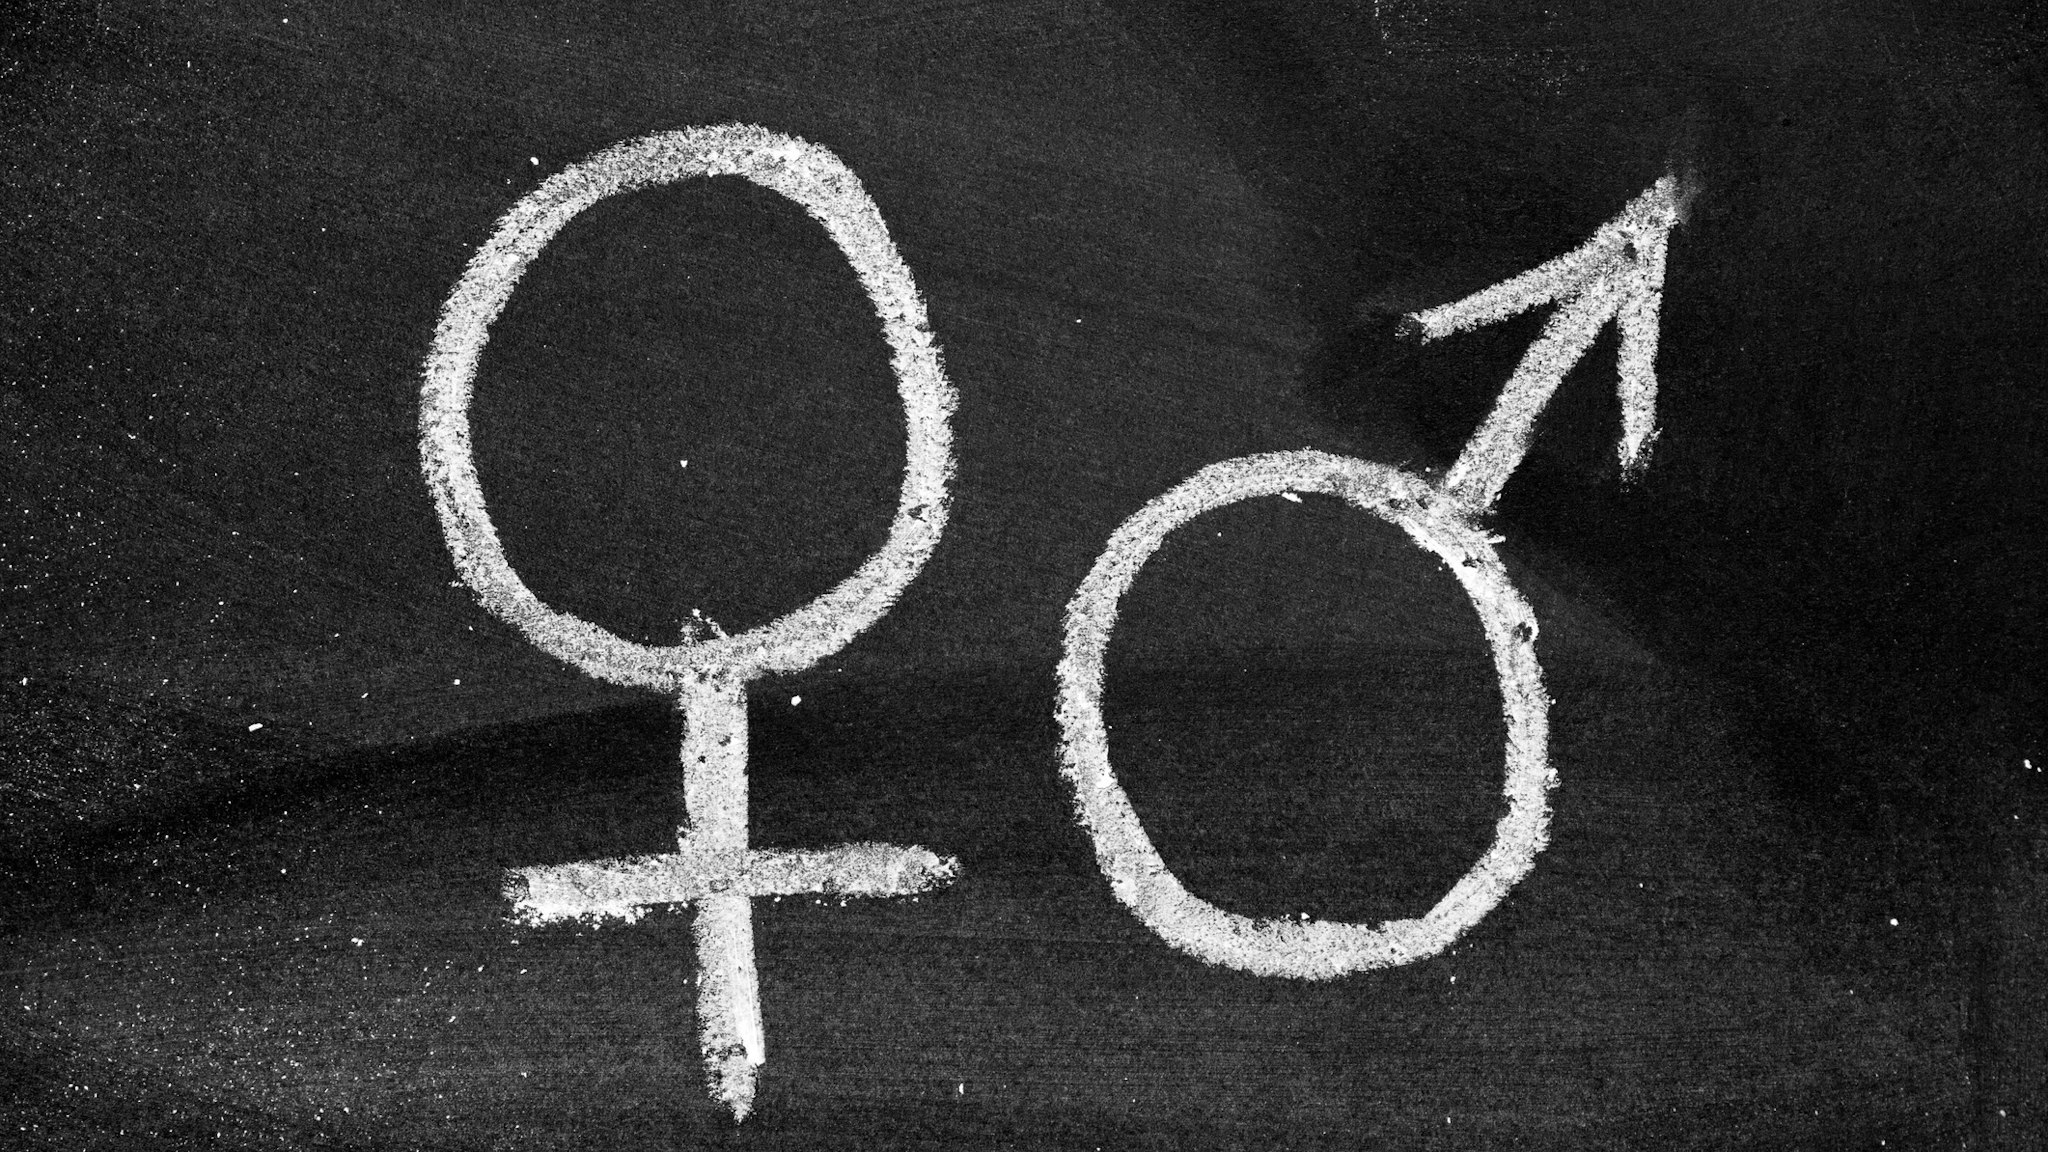 Male and female gender symbols on blackboard - stock photo akinbostanci via Getty Images